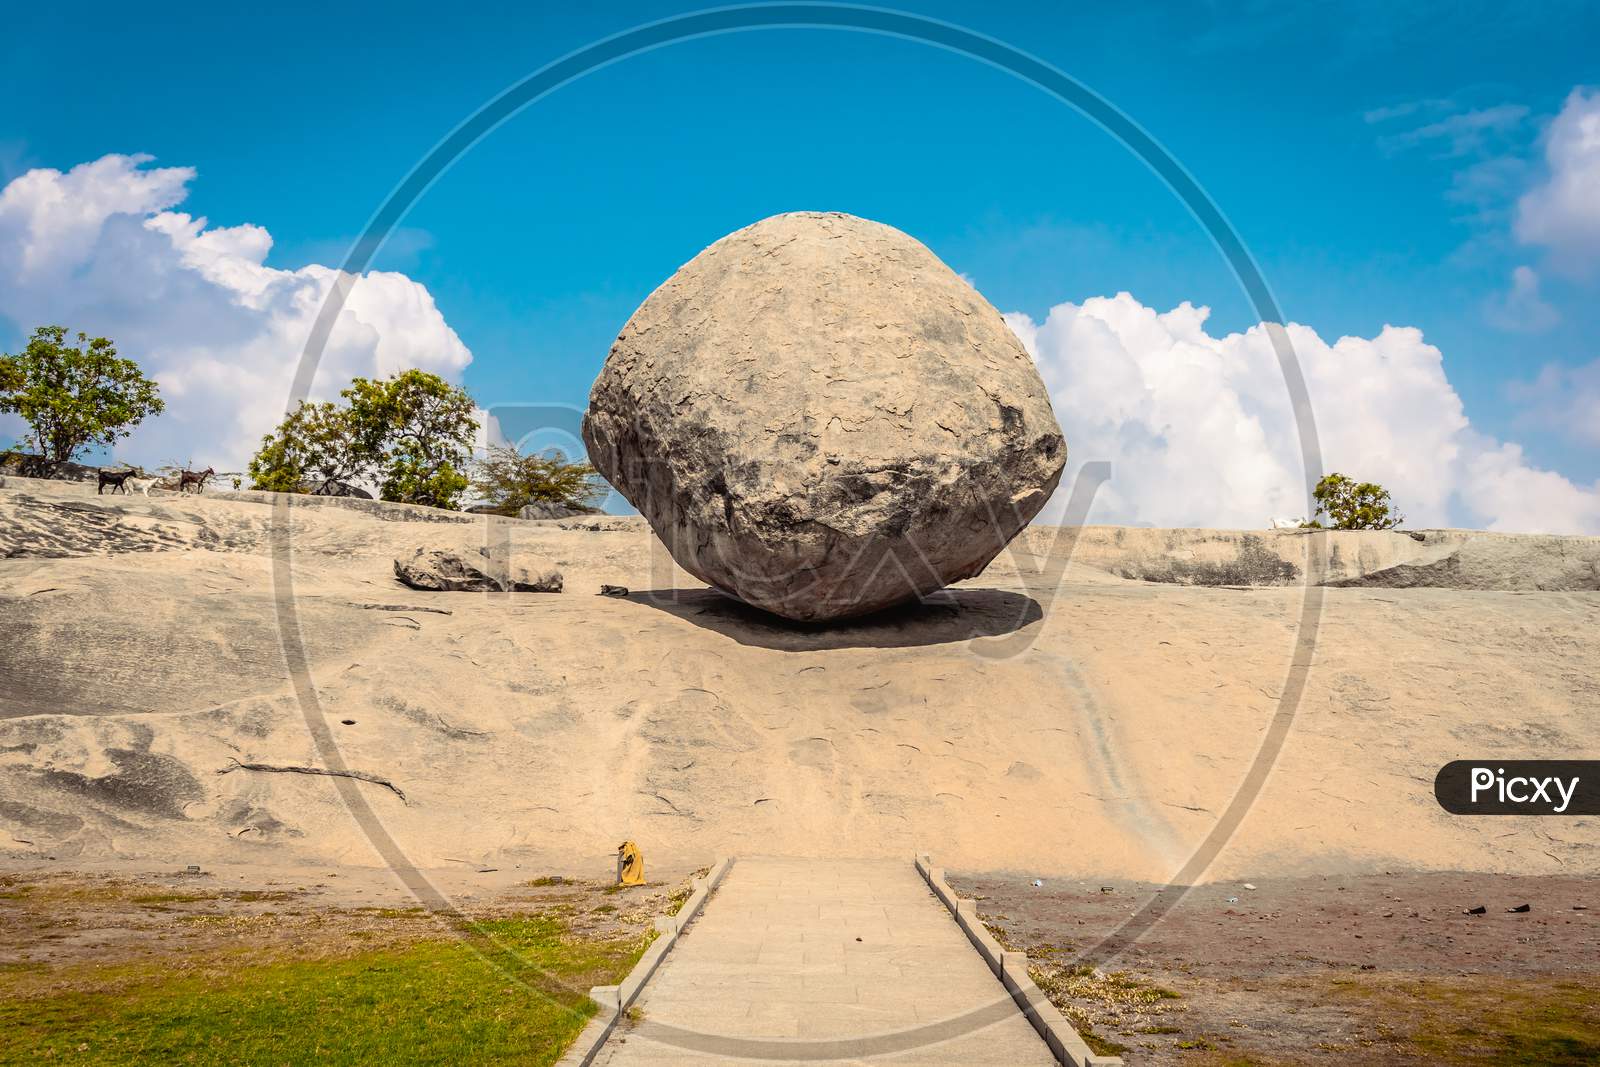 Krishna Butter Ball is UNESCO's World Heritage Site located at Mamallapuram or Mahabalipuram in Tamil Nadu, South India